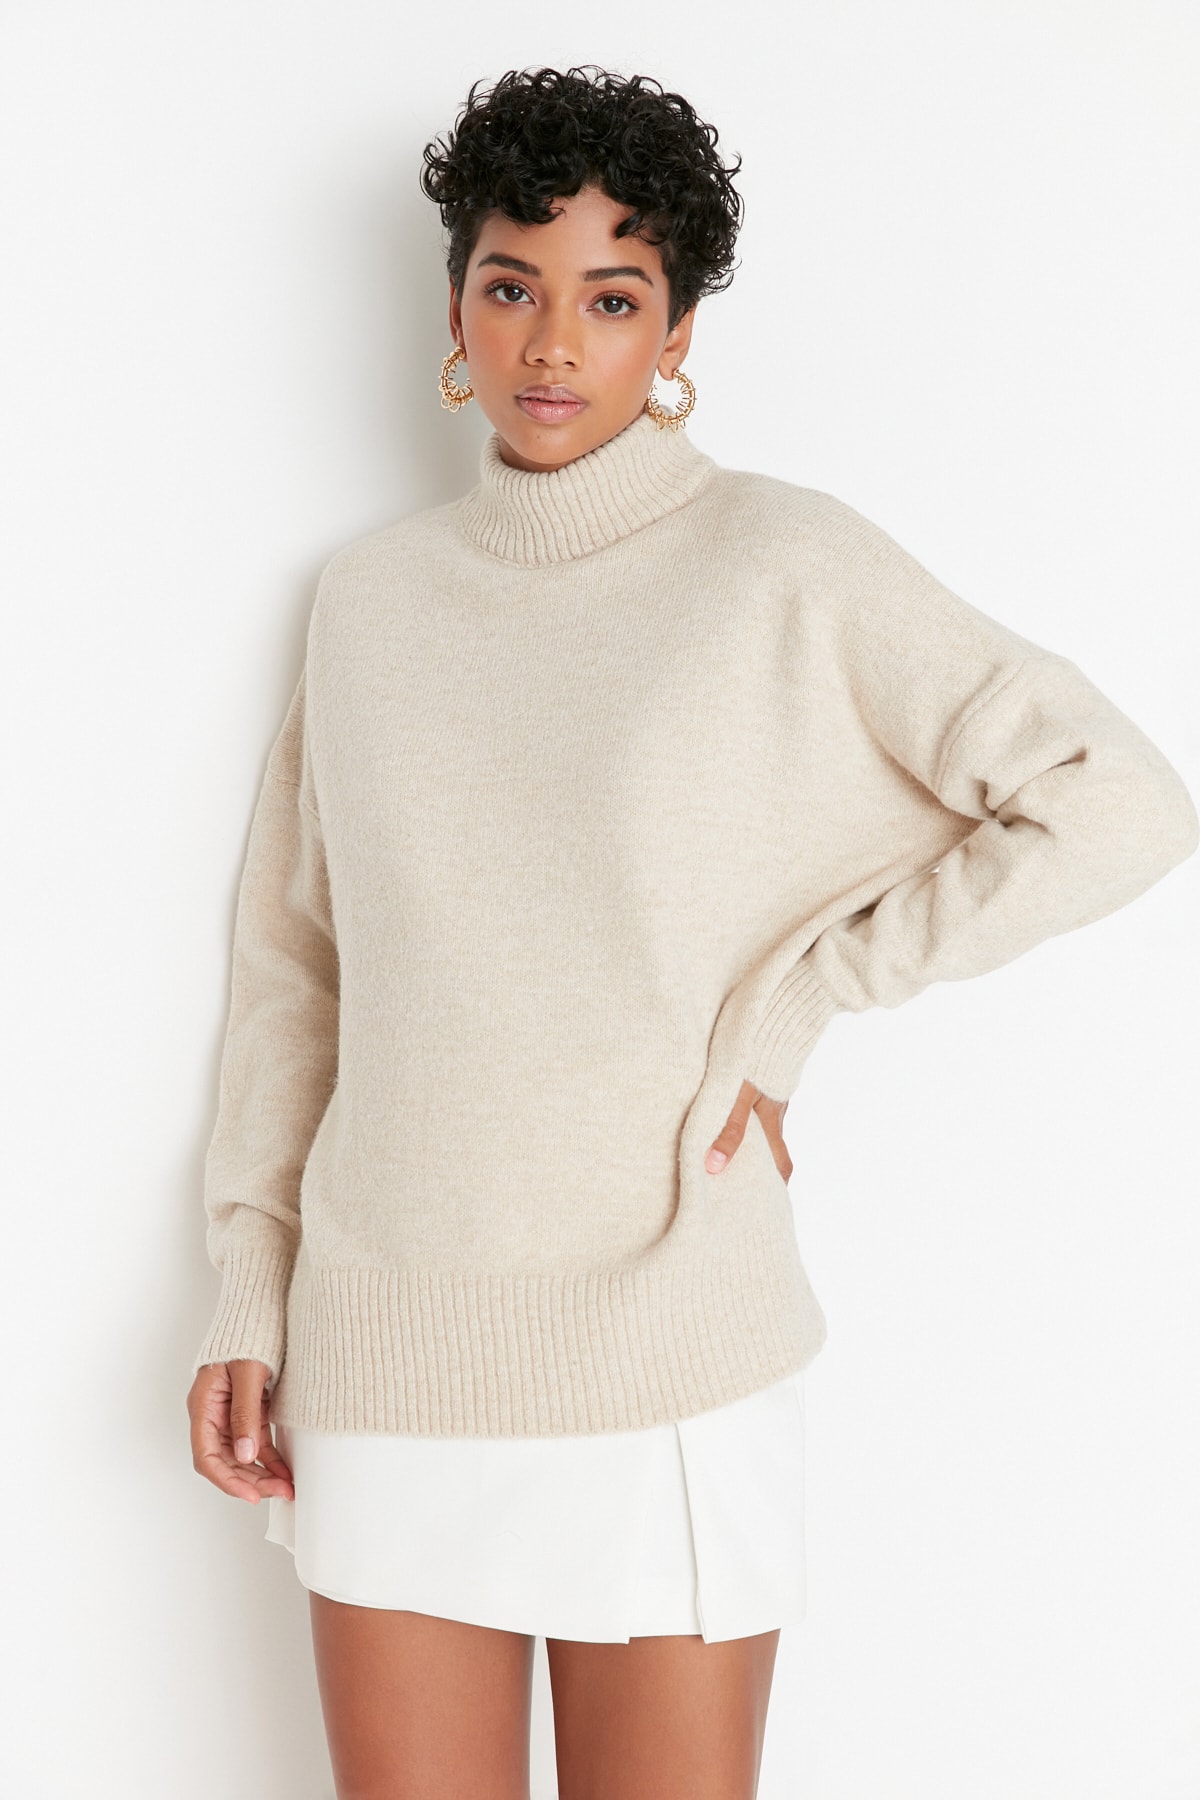 Trendyol Stone Wide Pattern Soft Textured High Collar Knitwear Sweater